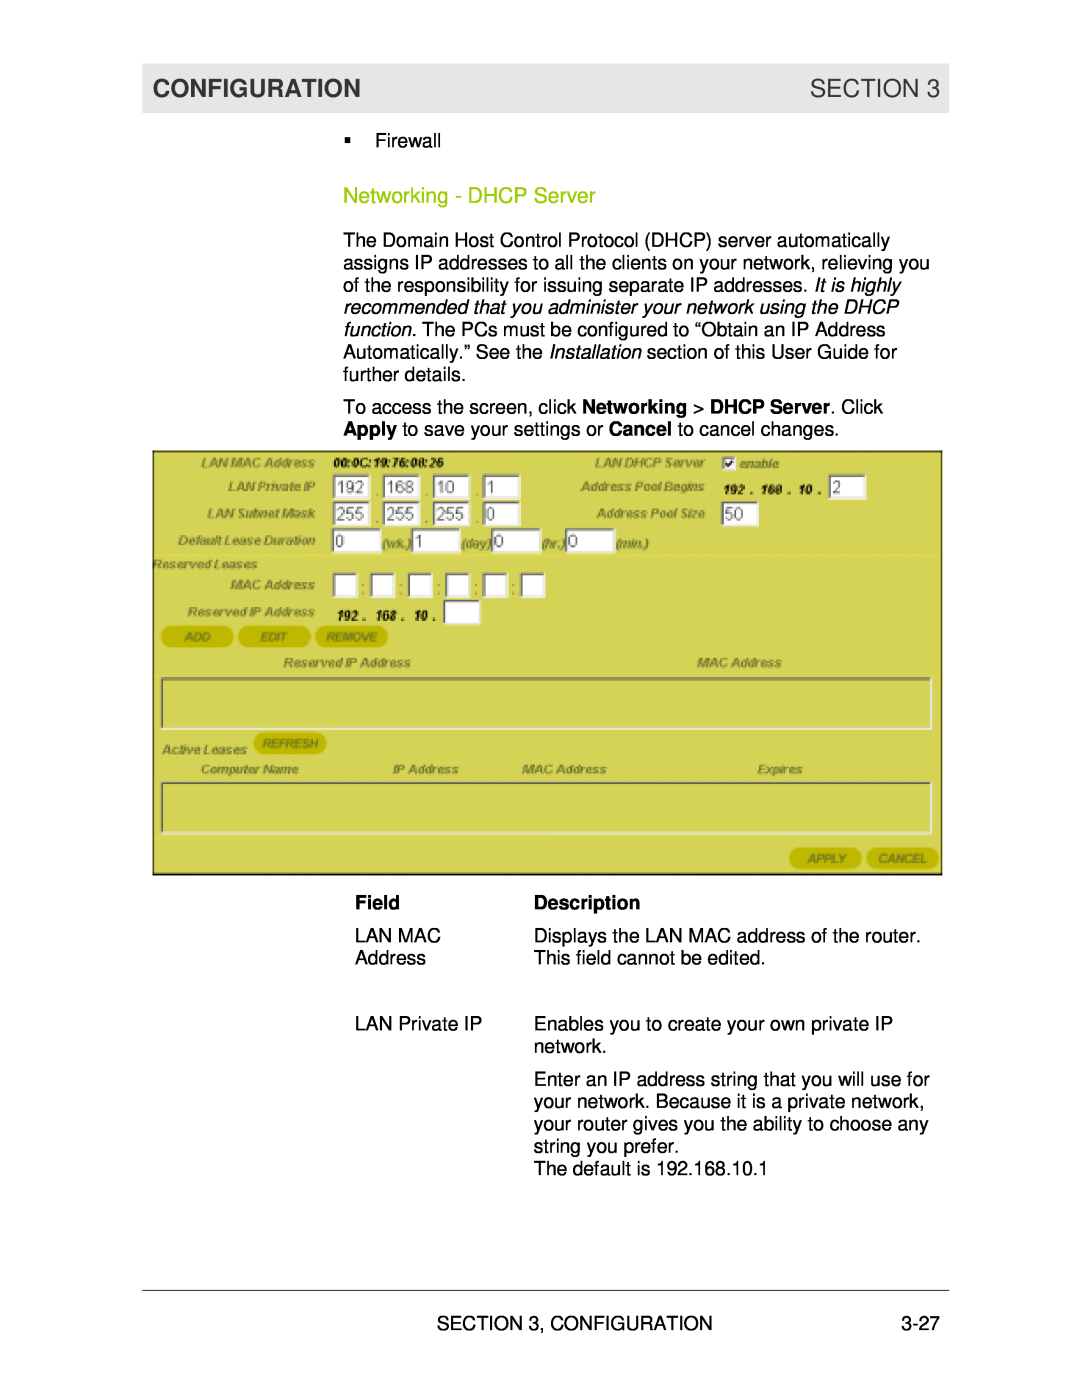 Motorola WR850G manual Networking - DHCP Server, Configuration, Section, Field, Description 